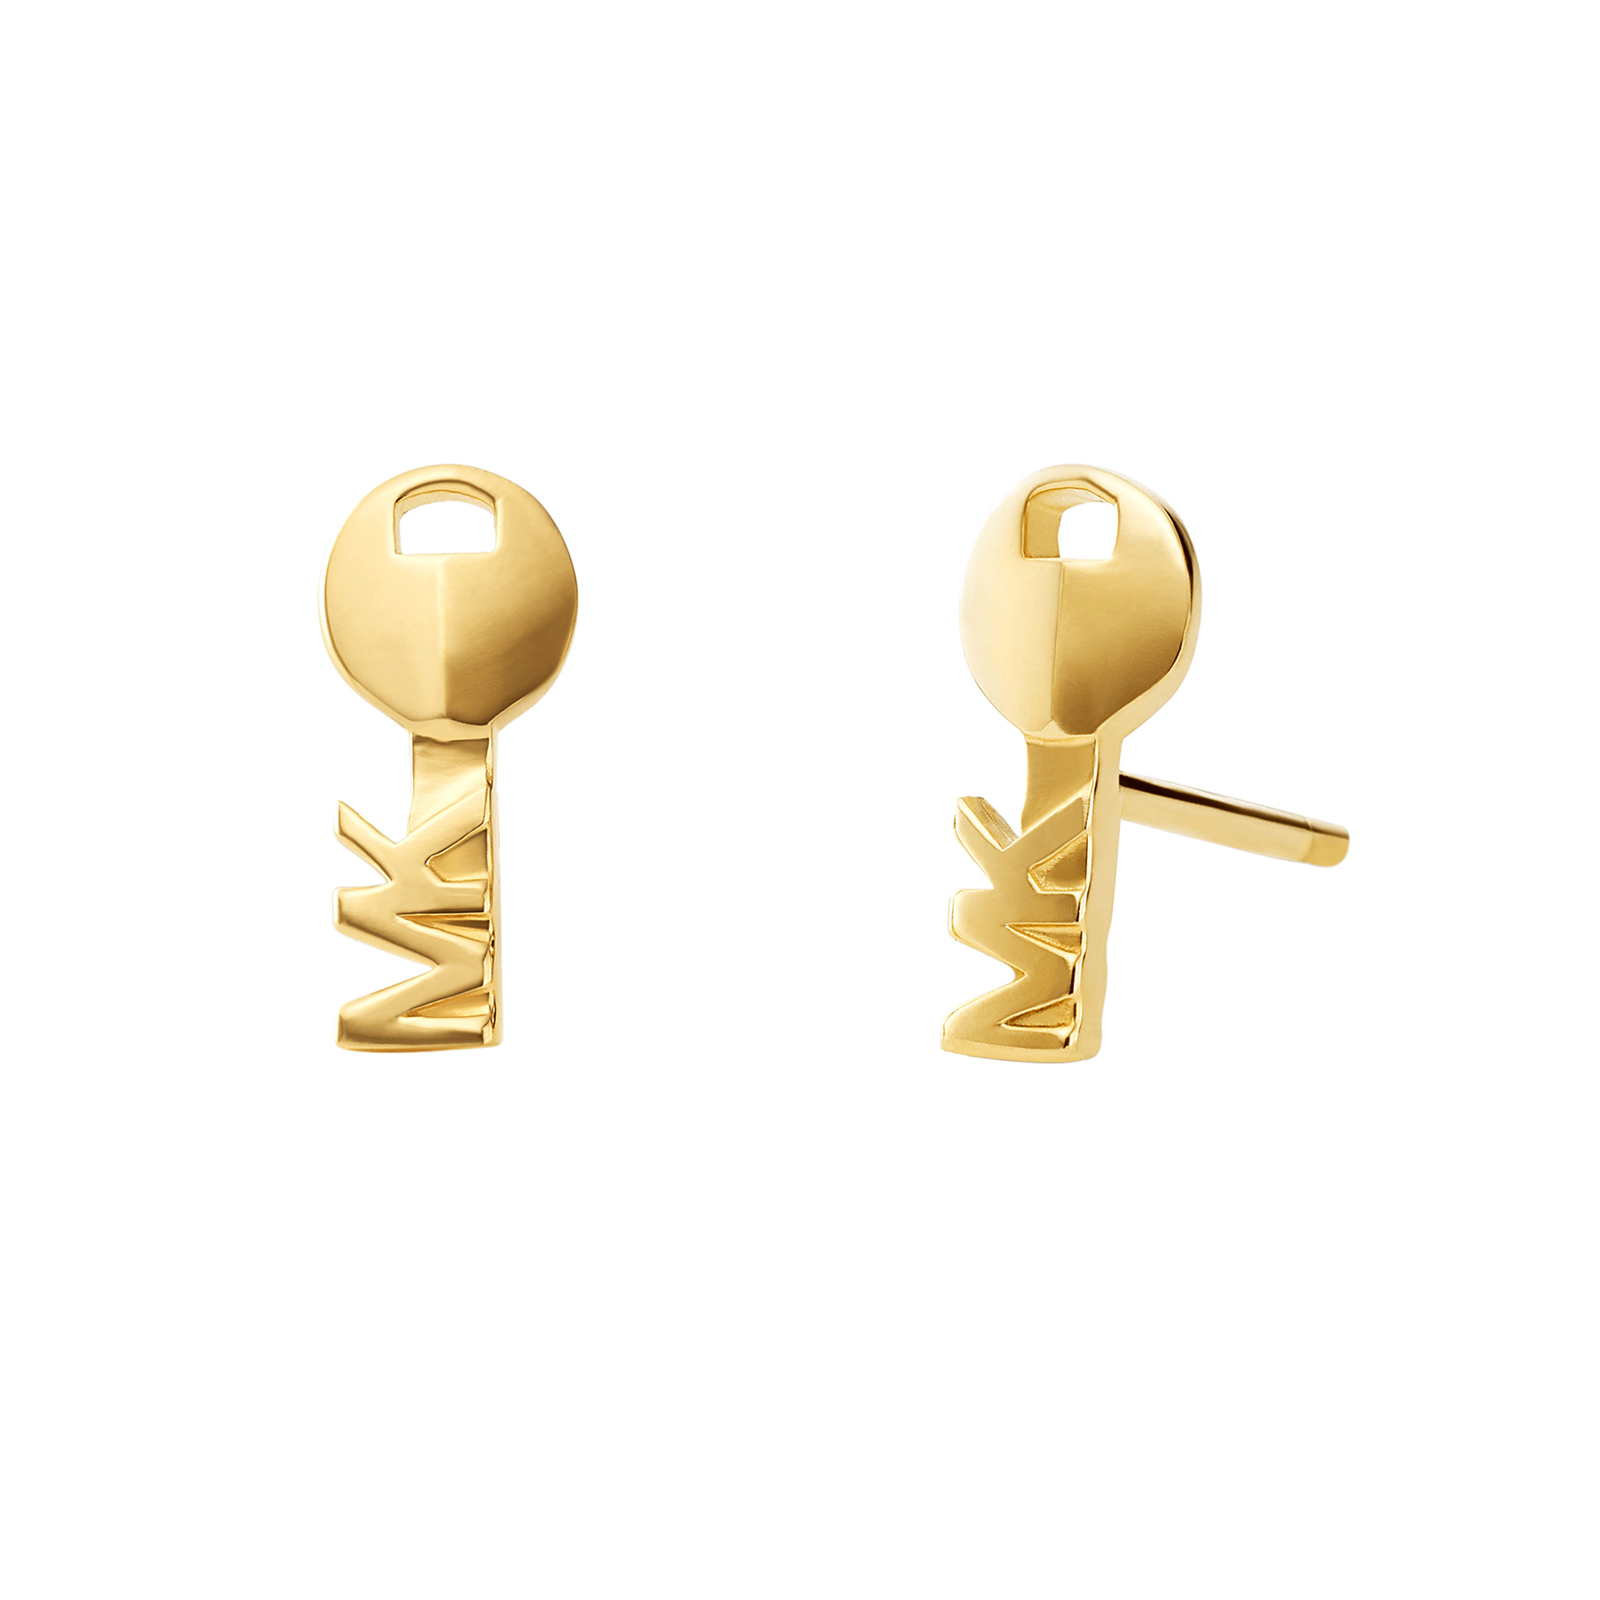 michael kors key earrings